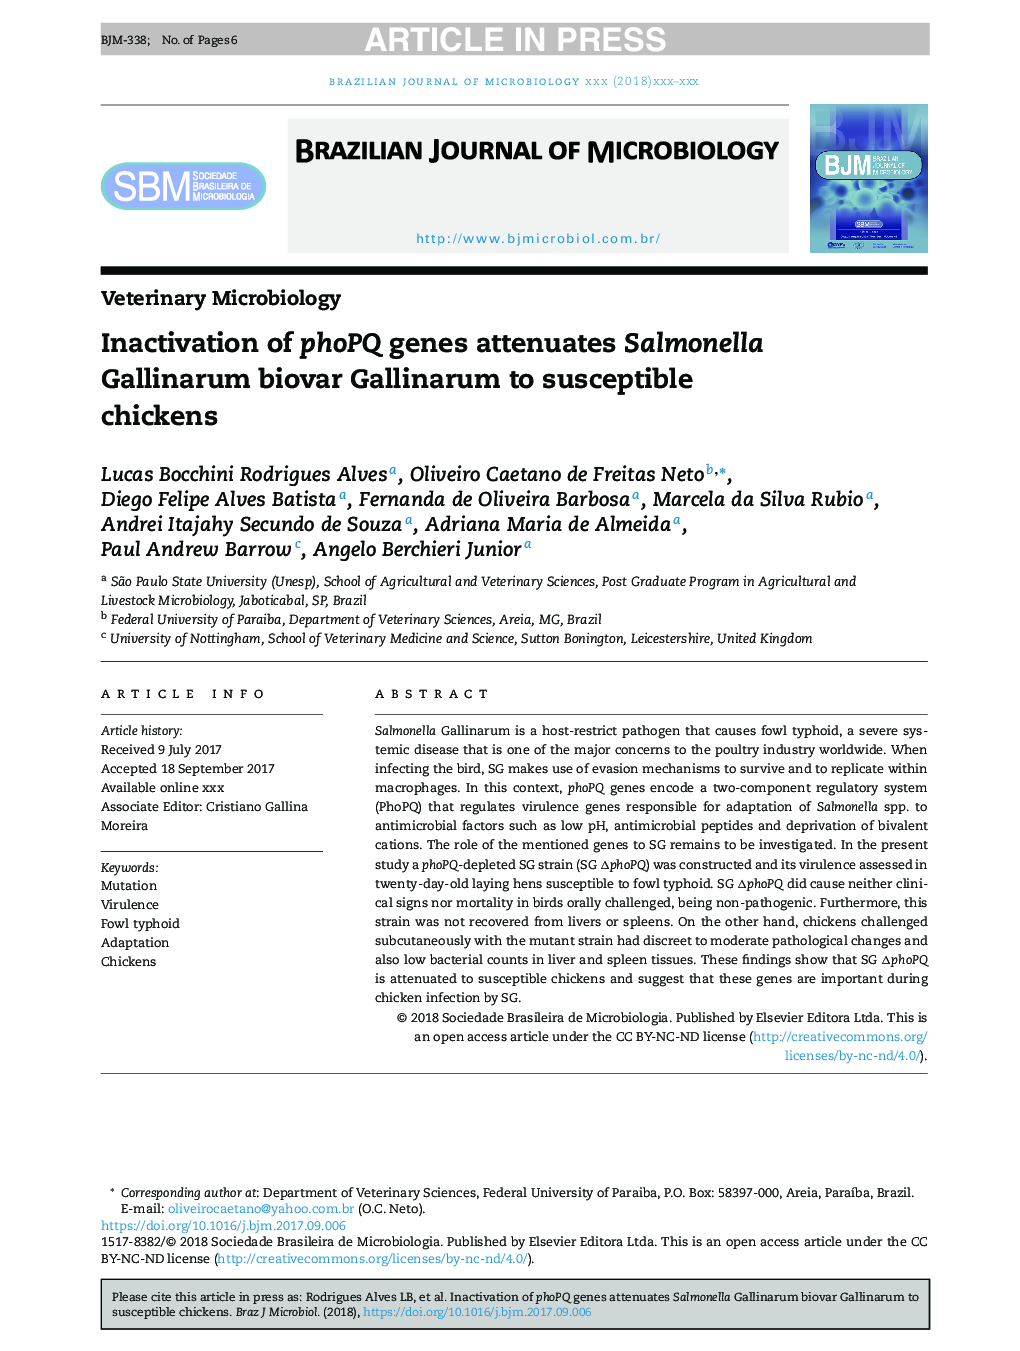 Inactivation of phoPQ genes attenuates Salmonella Gallinarum biovar Gallinarum to susceptible chickens